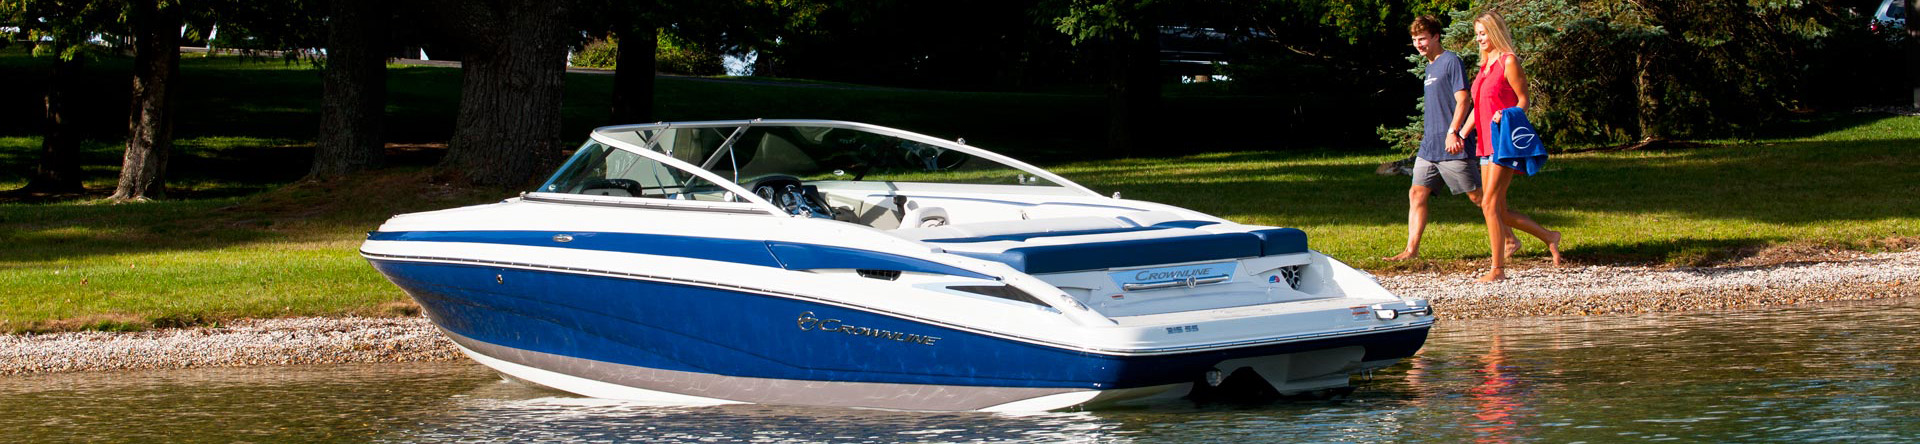 2020 Four Winns Horizon 180 for sale in Royal Marine Yacht Sales, Portland, Oregon